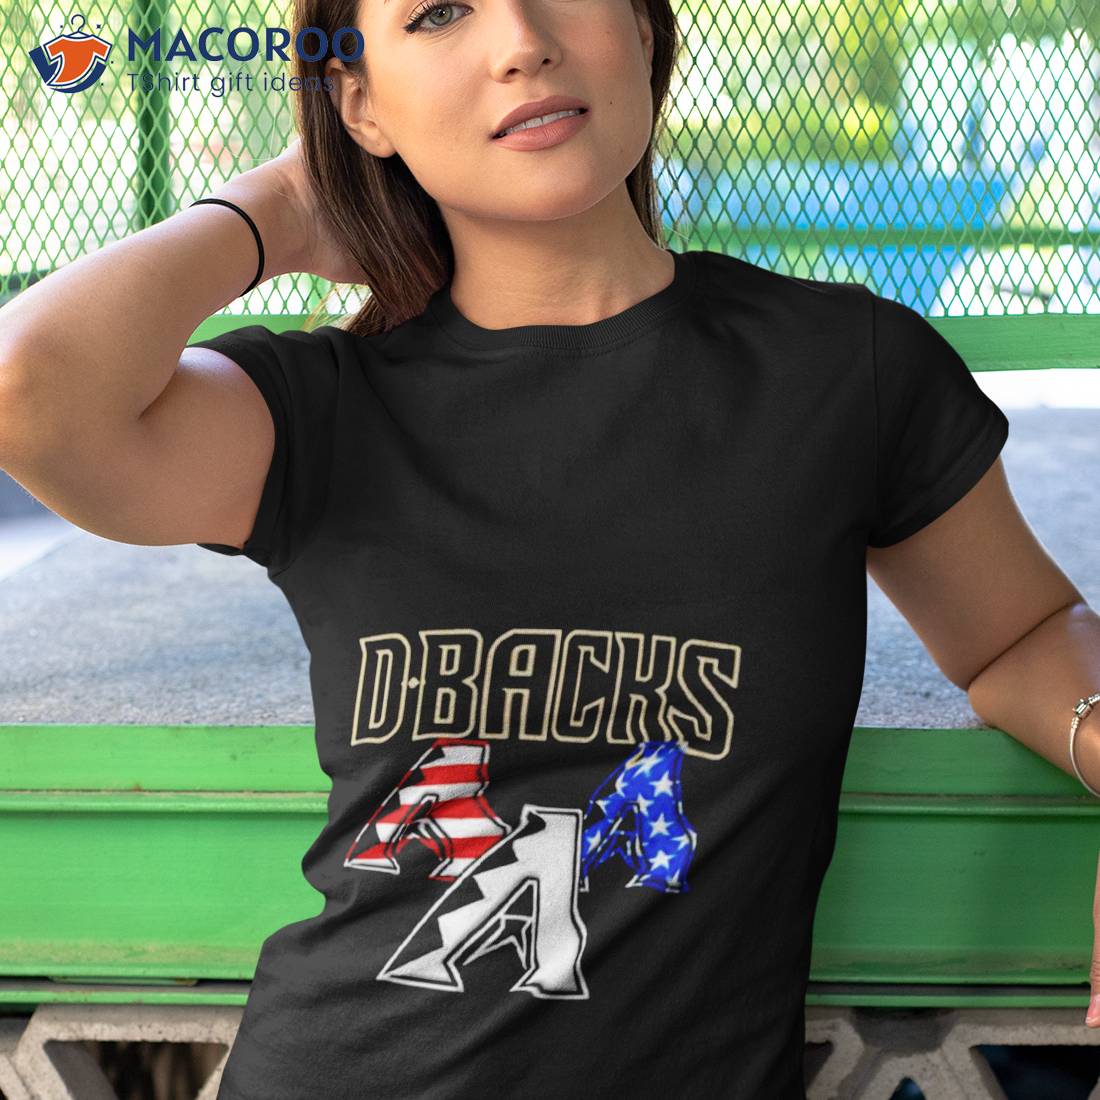 D-backs Gift Guide  Arizona Diamondbacks